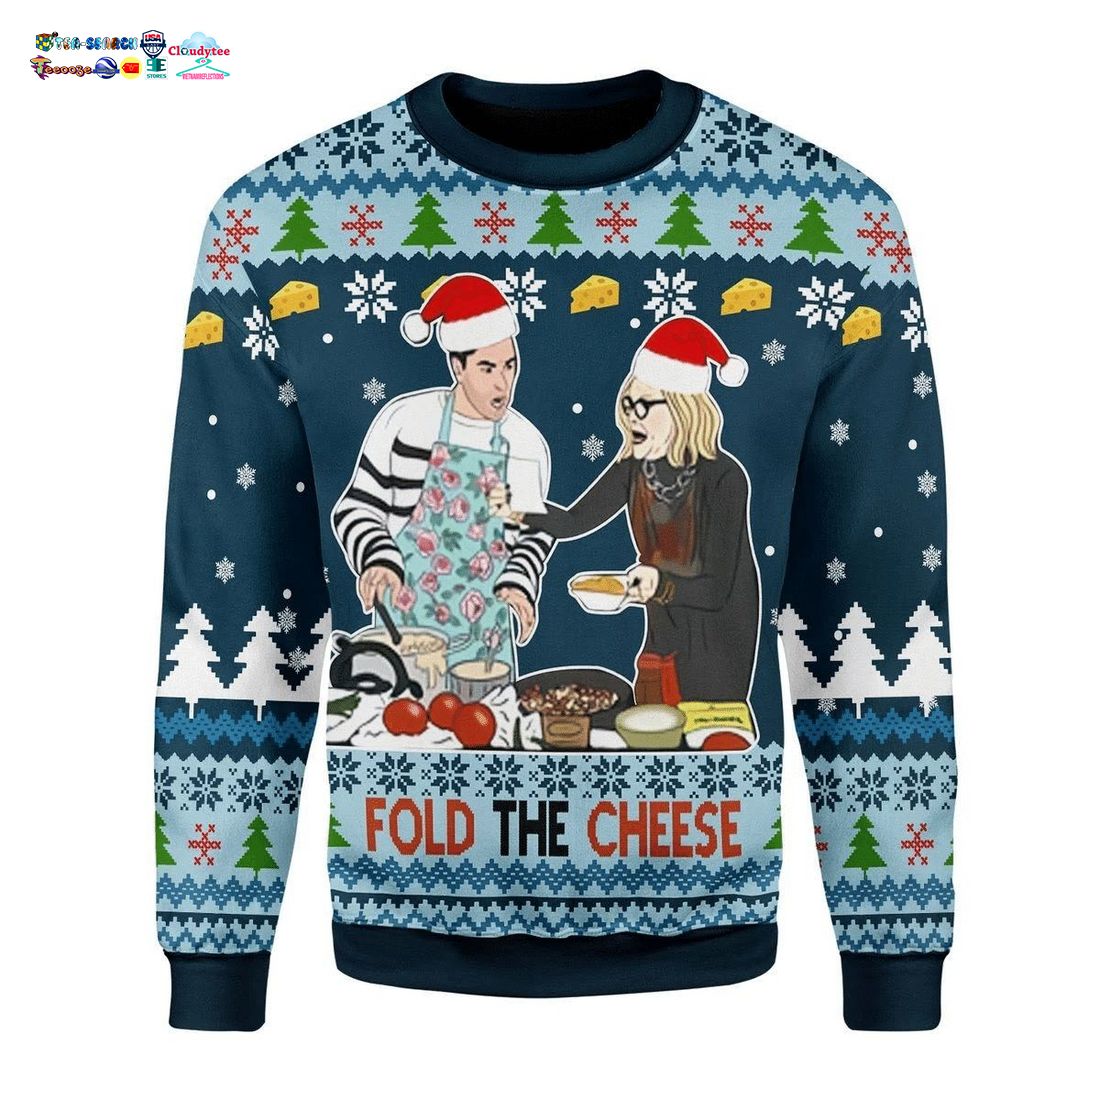 Schitt's Creek Fold The Cheese Ugly Christmas Sweater